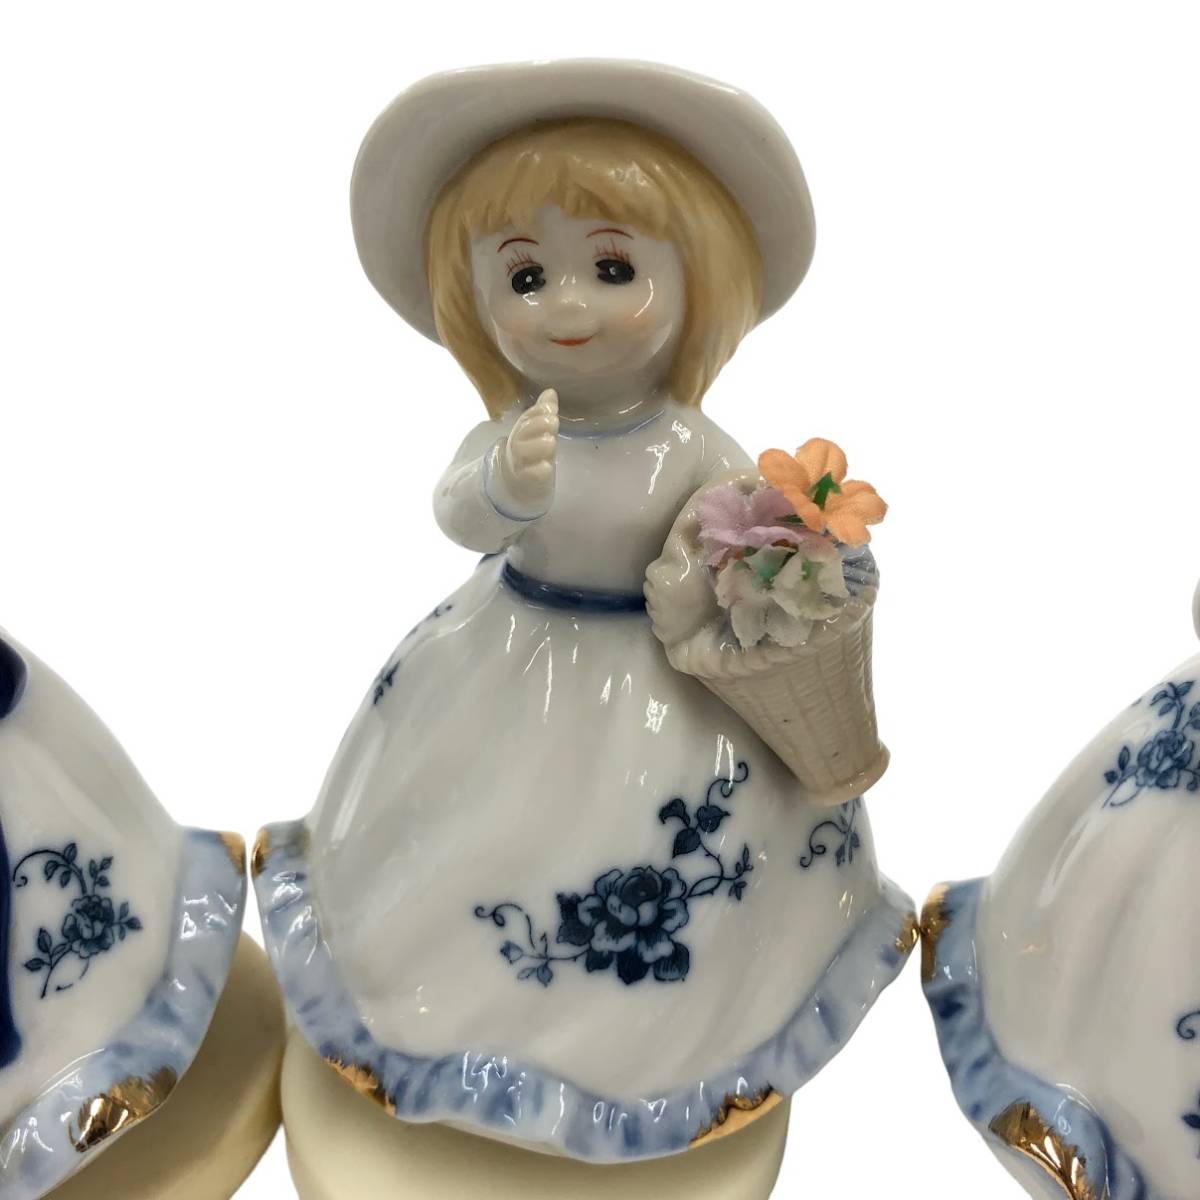 Demain ドマン 陶器製 陶器人形 オルゴール フィギュリン 花束を持った少女 猫 3体セット まとめ売り_画像4